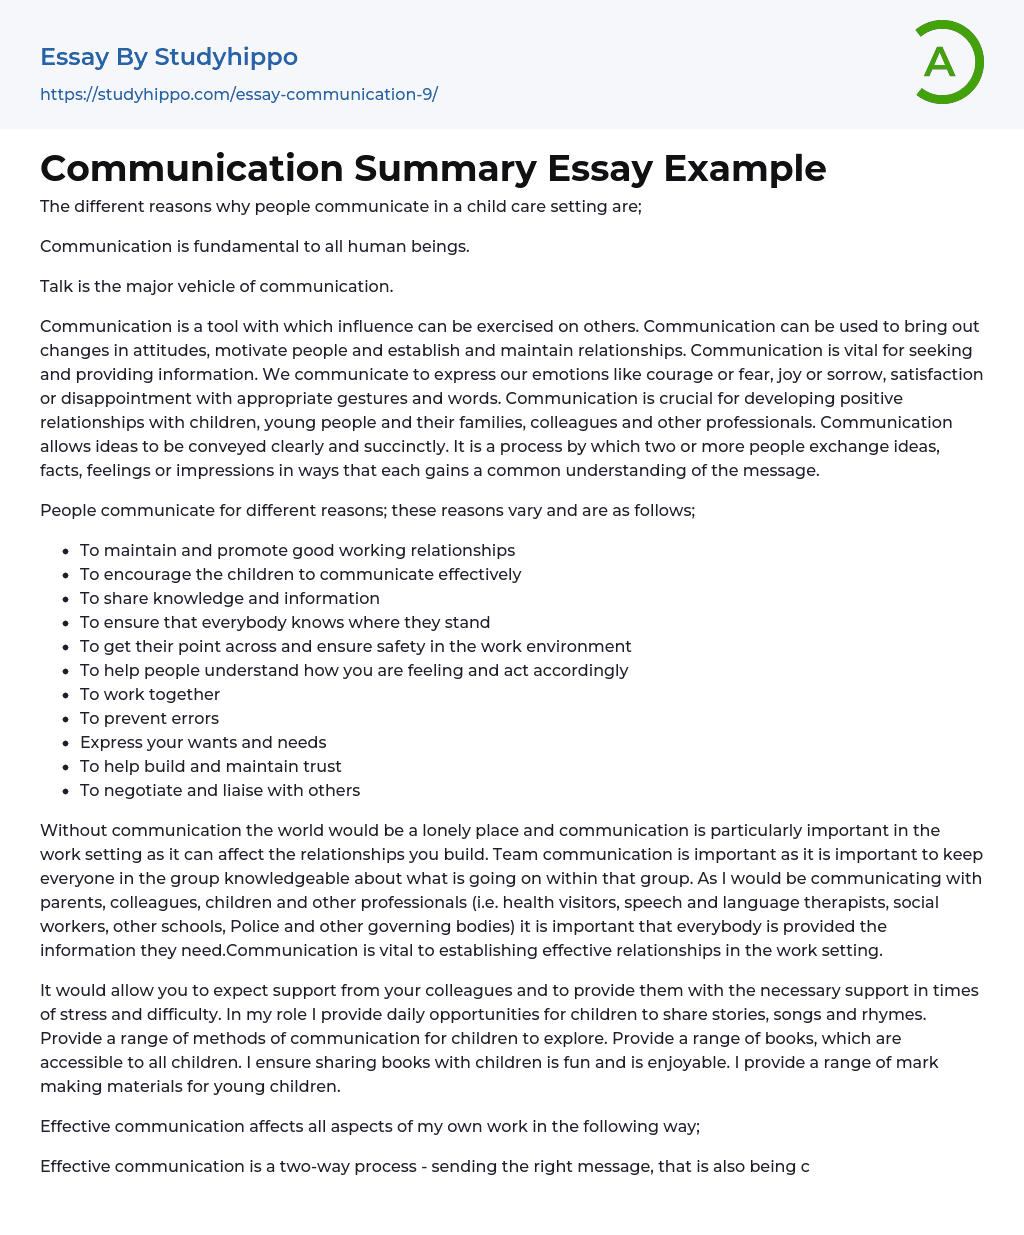 Communication Summary Essay Example